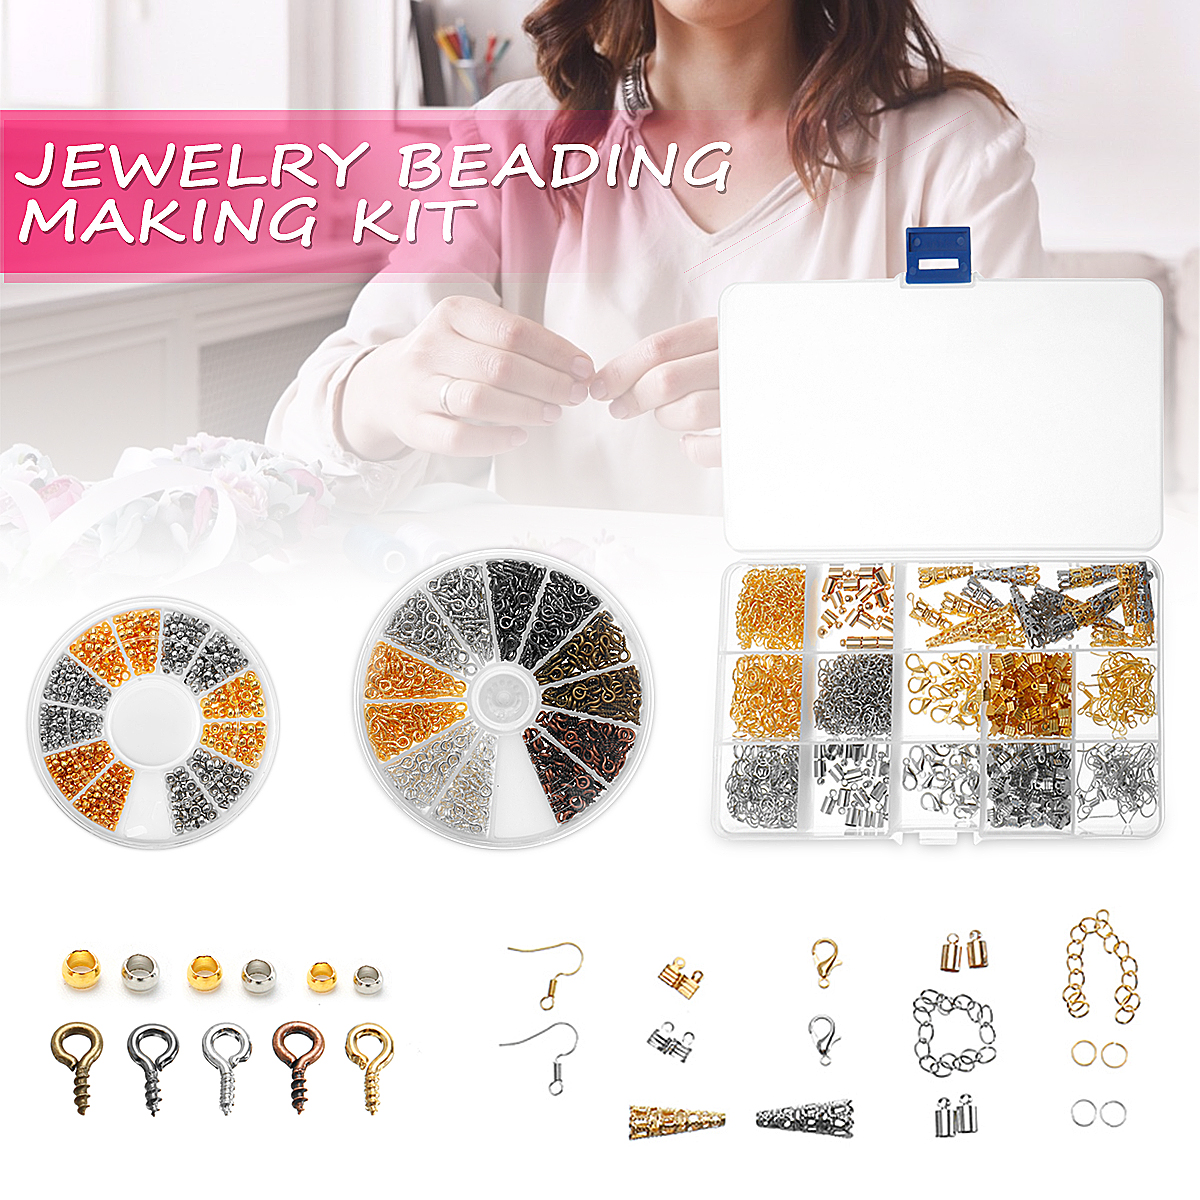 Jewelry-Findings-Kit-Jewelry-Beading-Making-and-Repair-Tools-Kit-Clasper-1453790